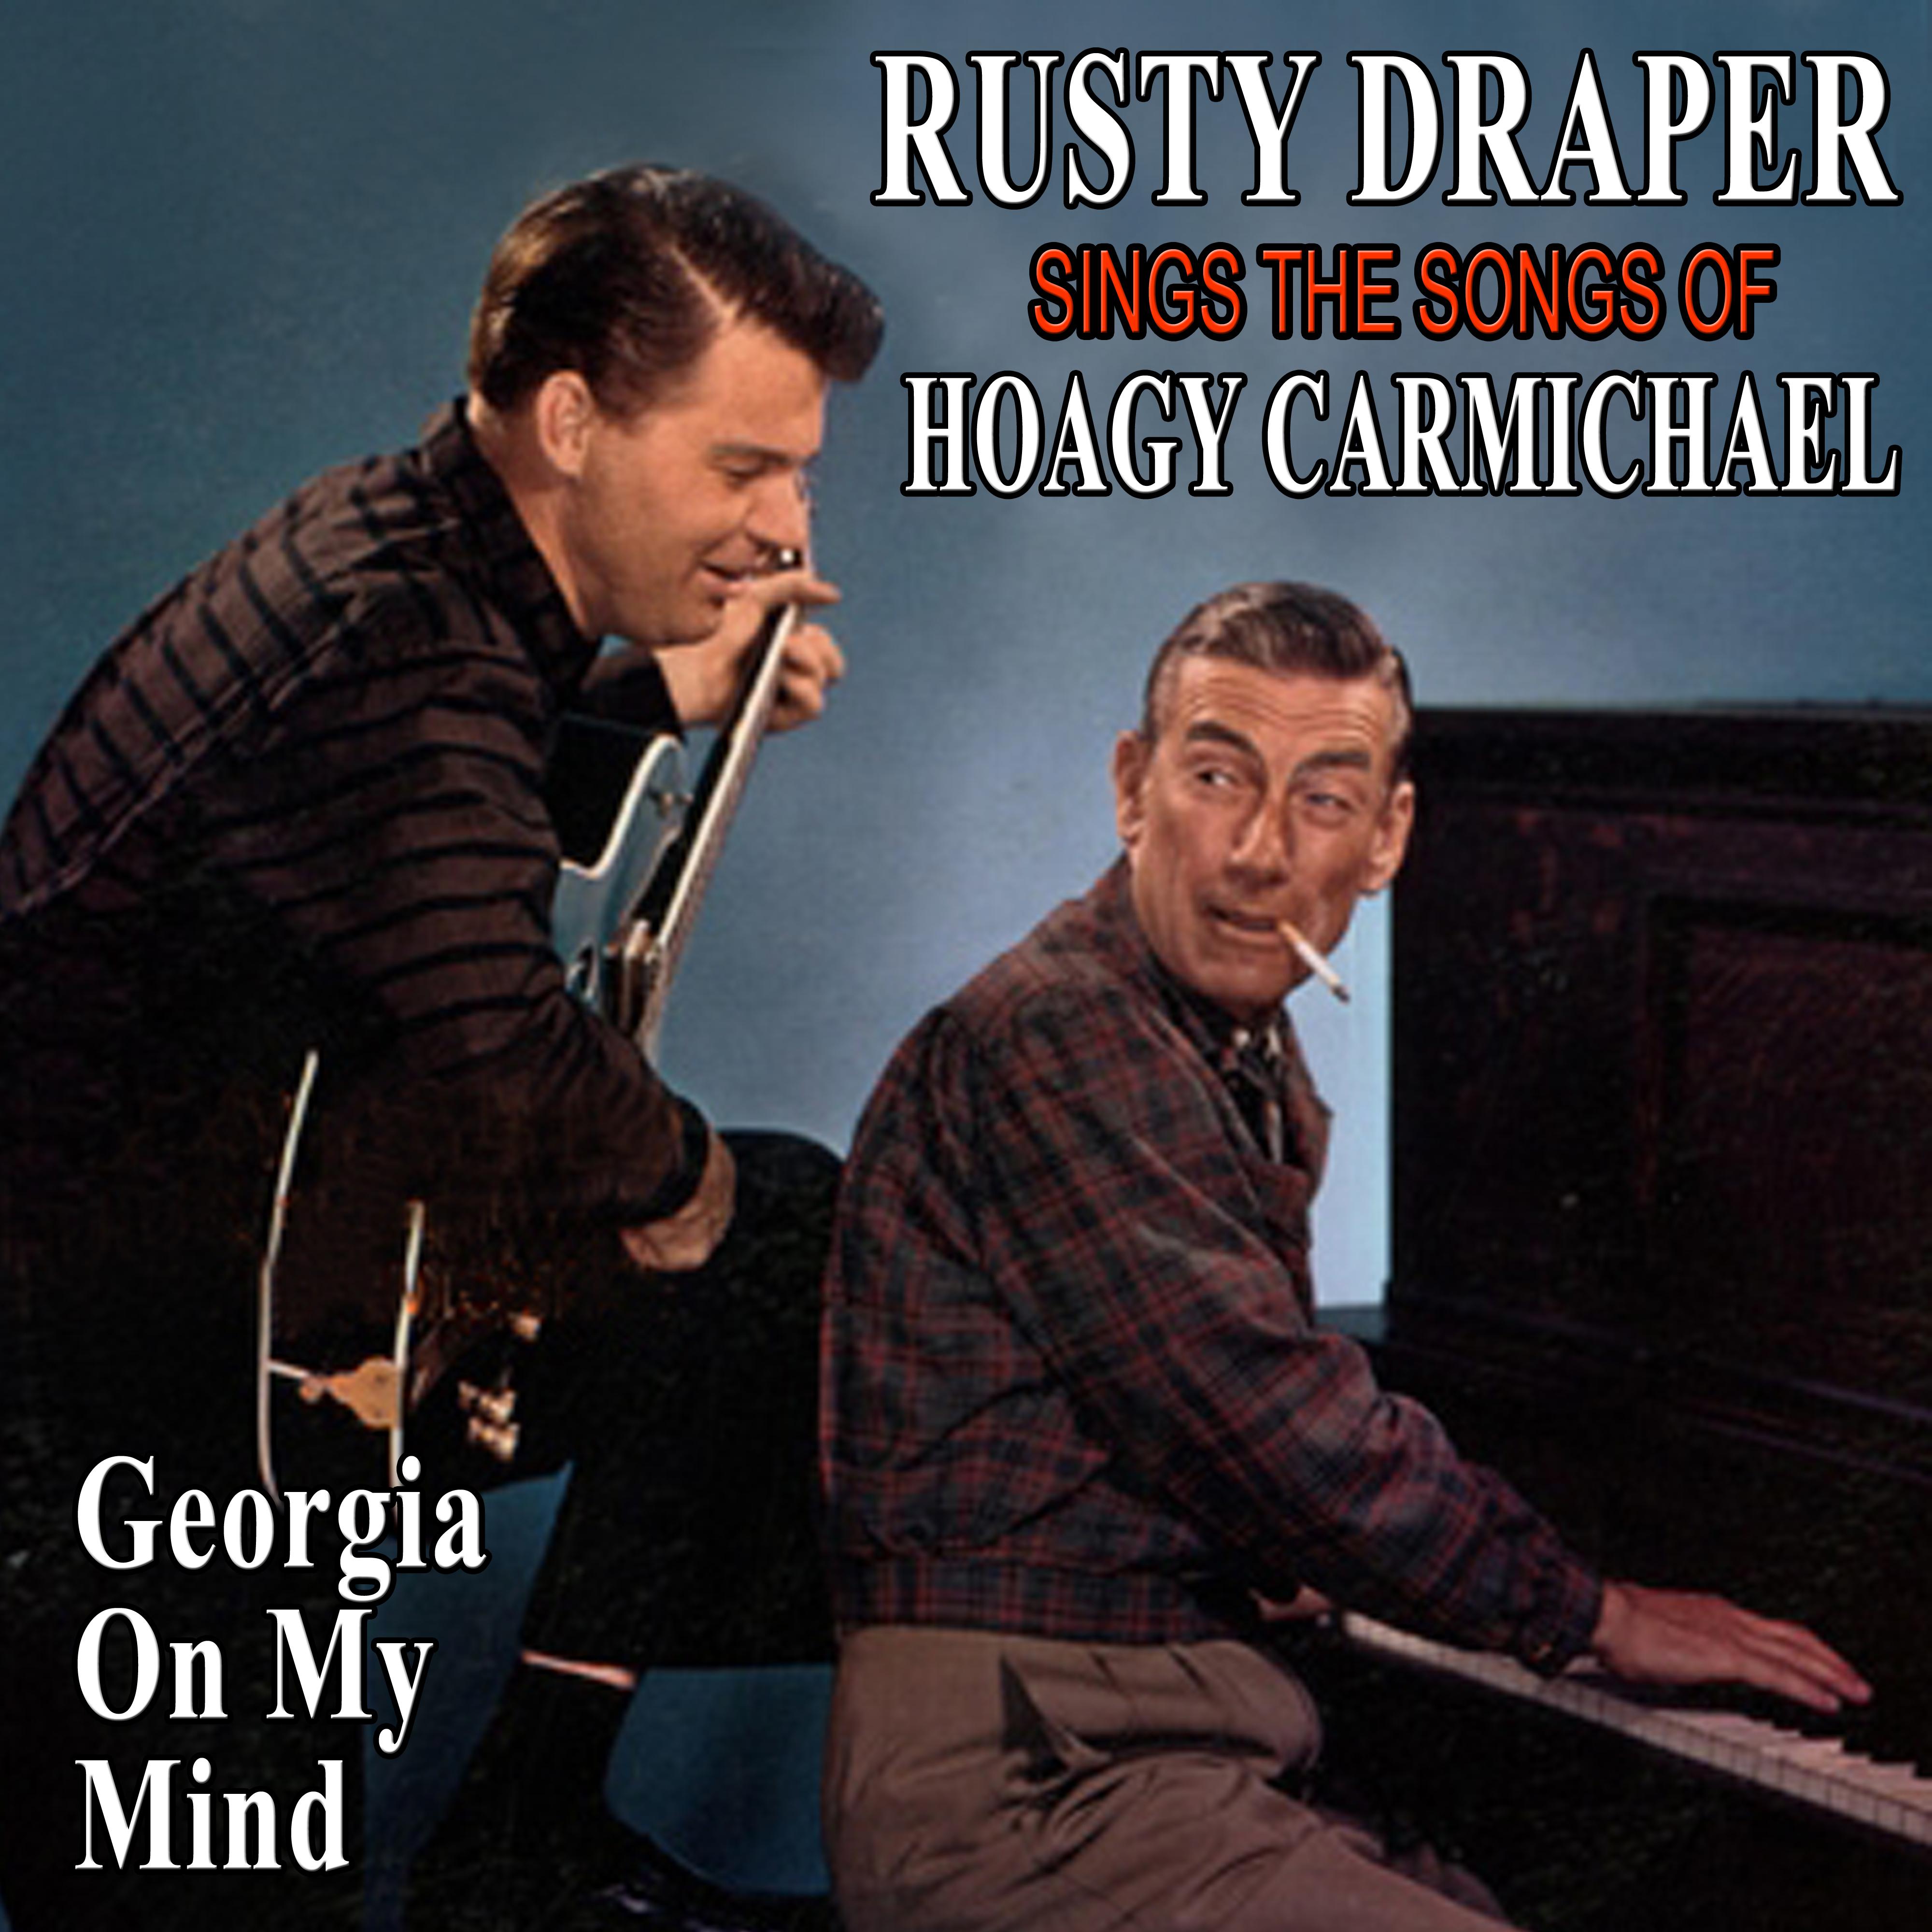 Georgia On My Mind: Rusty Draper Sings the Songs of Hoagy Carmichael